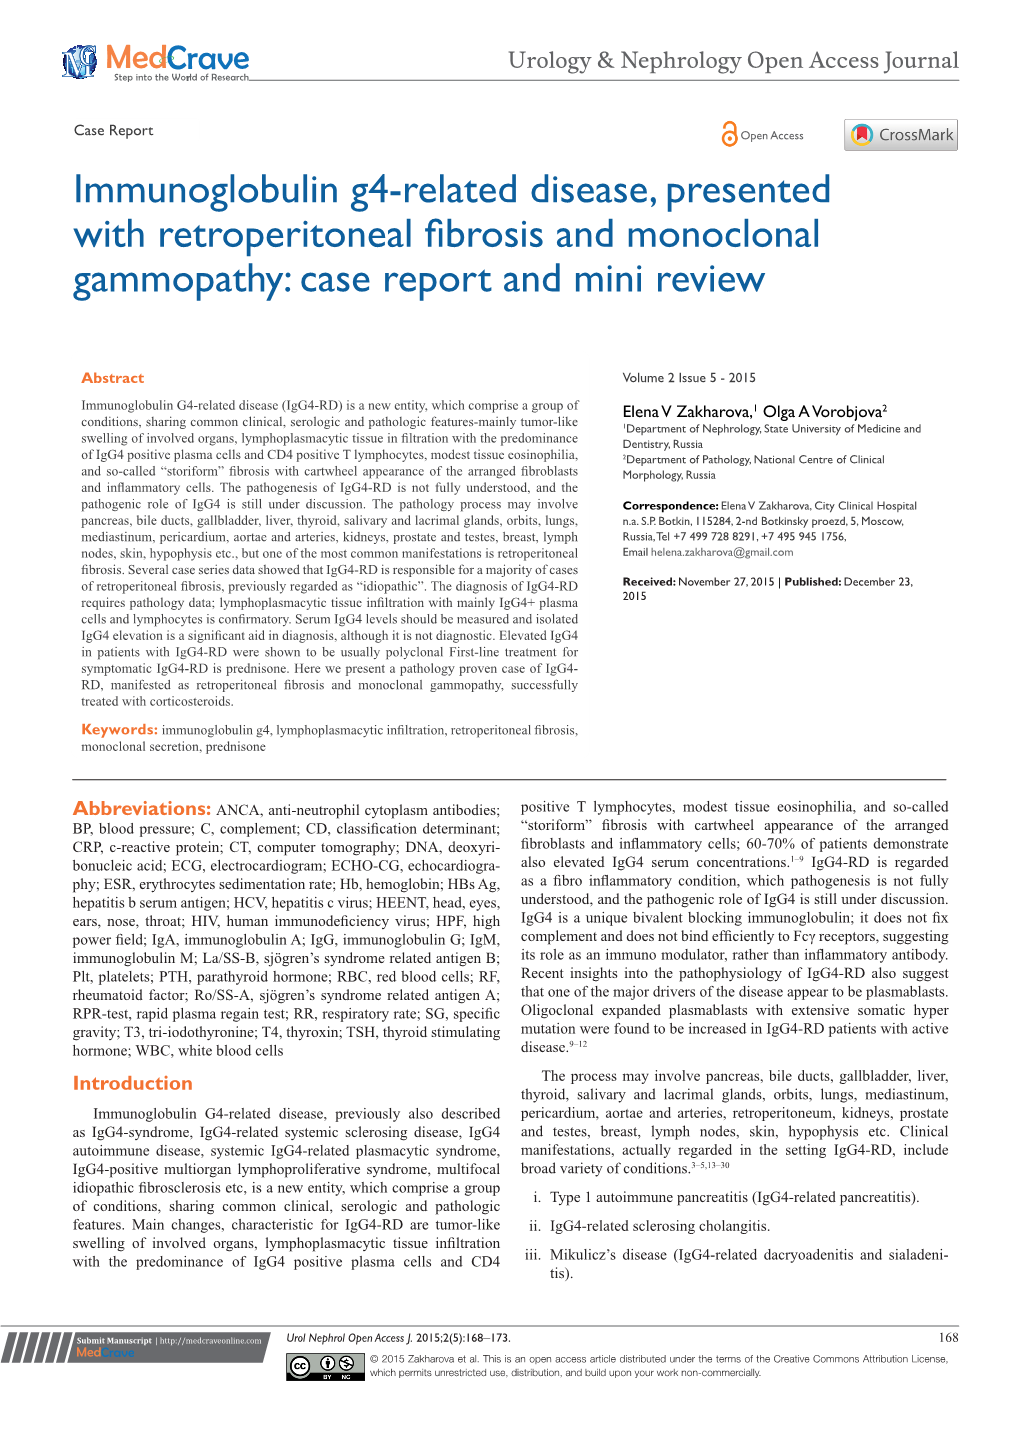 Immunoglobulin G4-Related Disease, Presented with Retroperitoneal Fibrosis and Monoclonal Gammopathy: Case Report and Mini Review